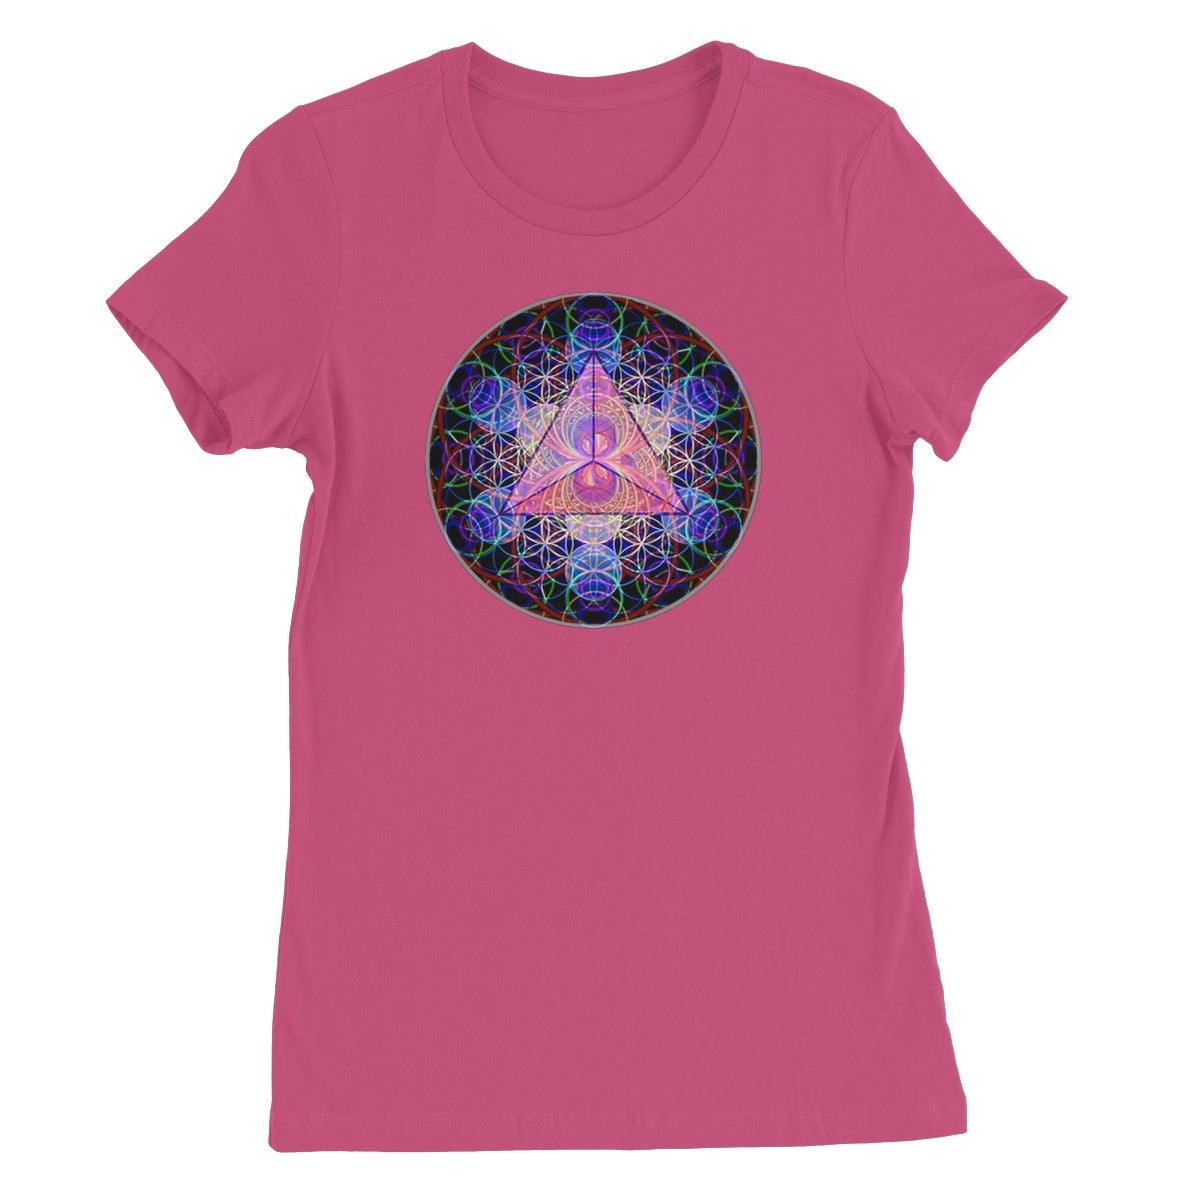 The Platonic Solid Tetrahedron Women's Favourite T-Shirt